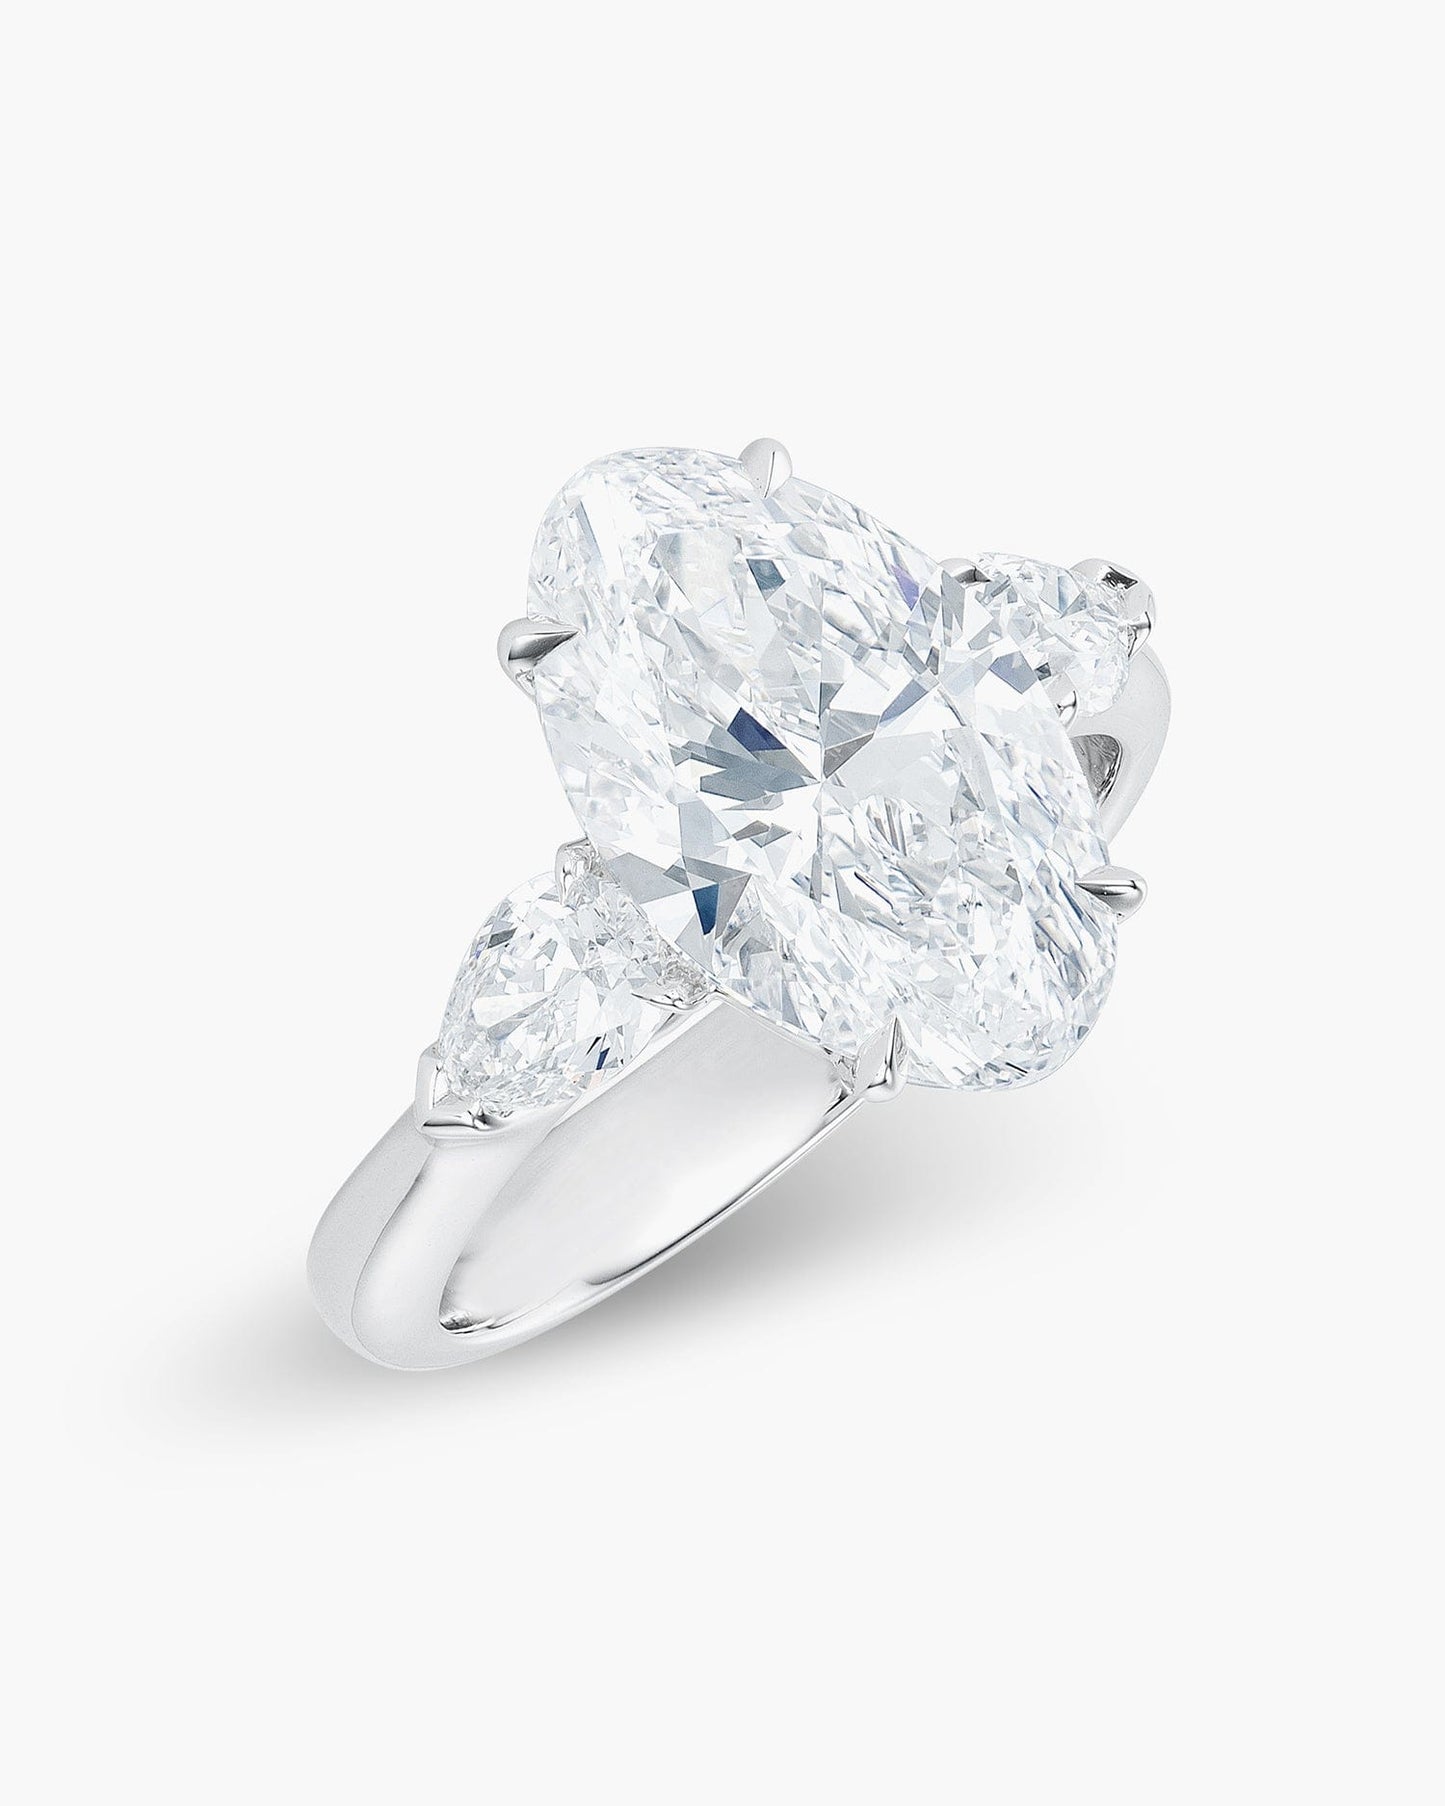 3.95 carat Oval Shape Diamond Ring